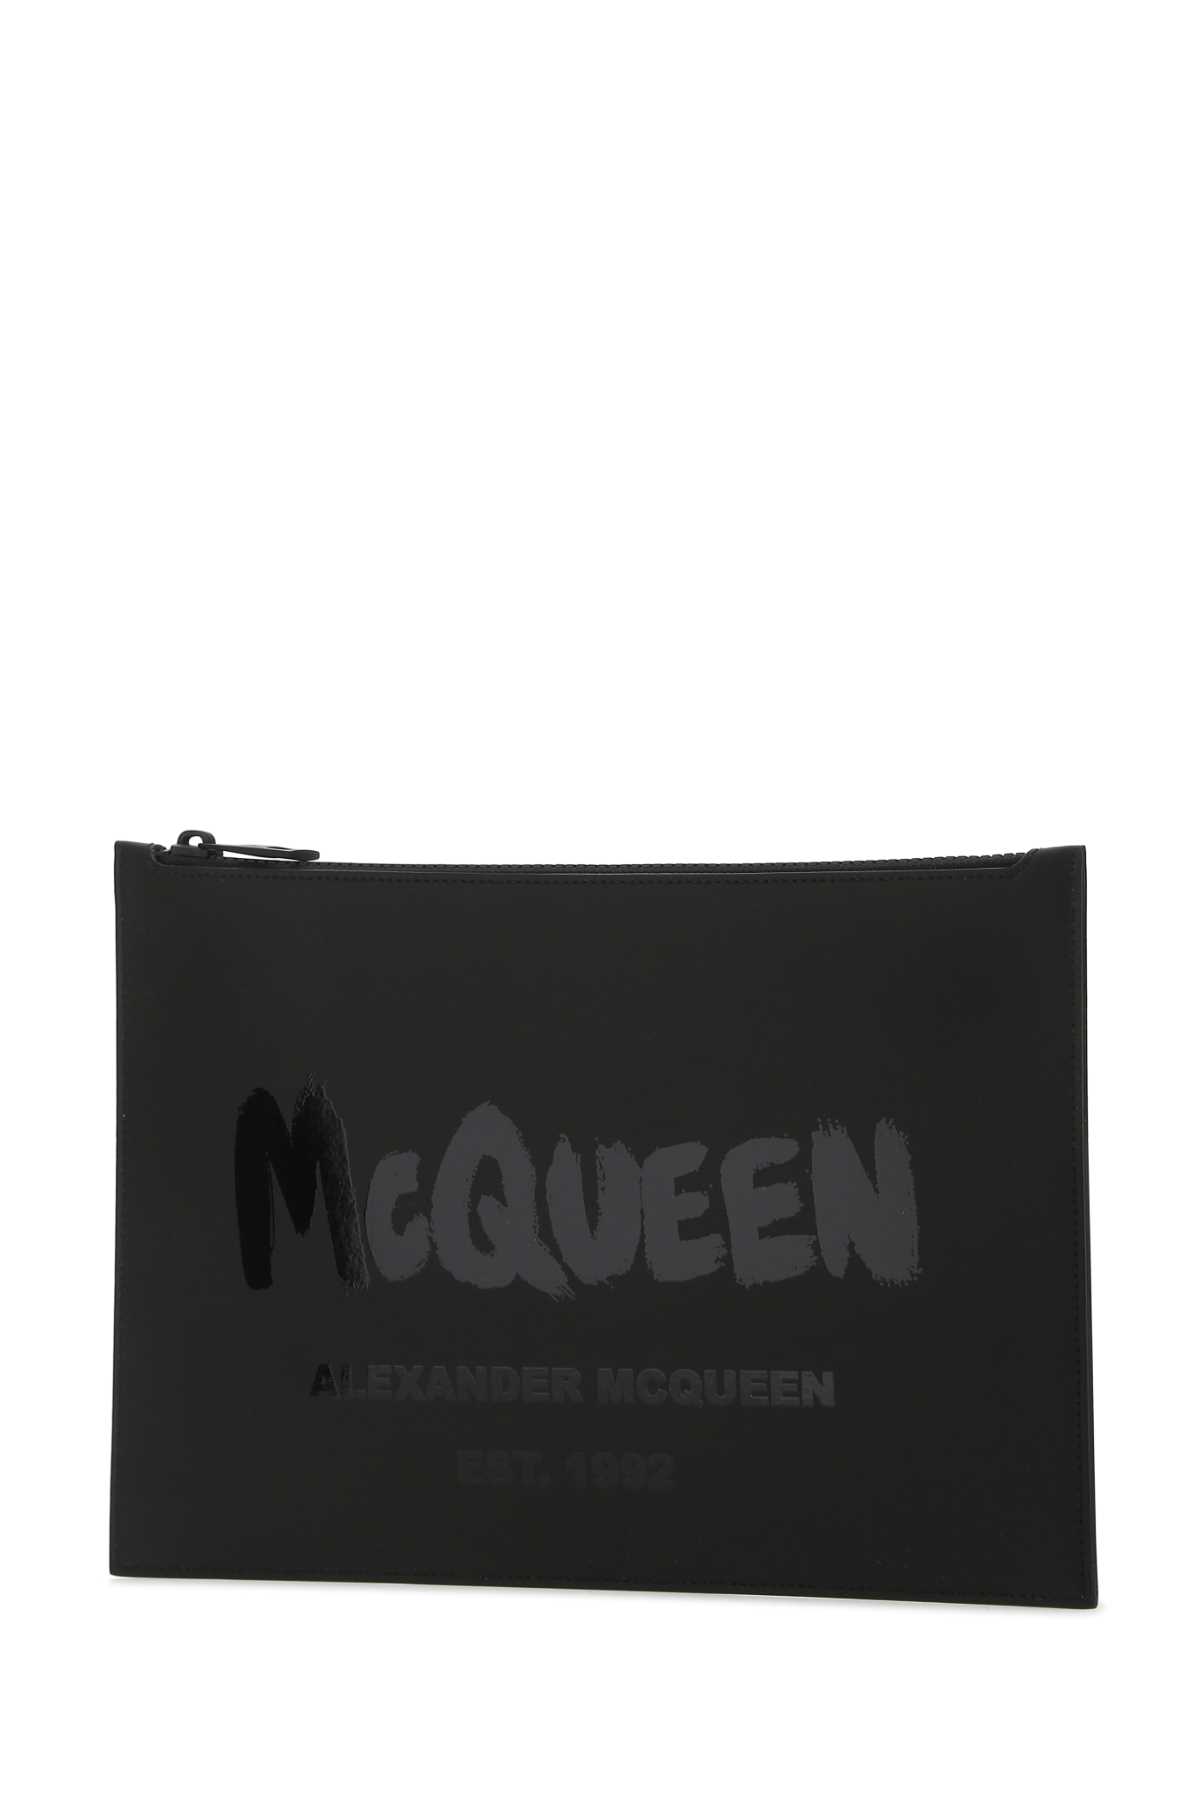 Alexander Mcqueen Black Leather Clutch In Orange